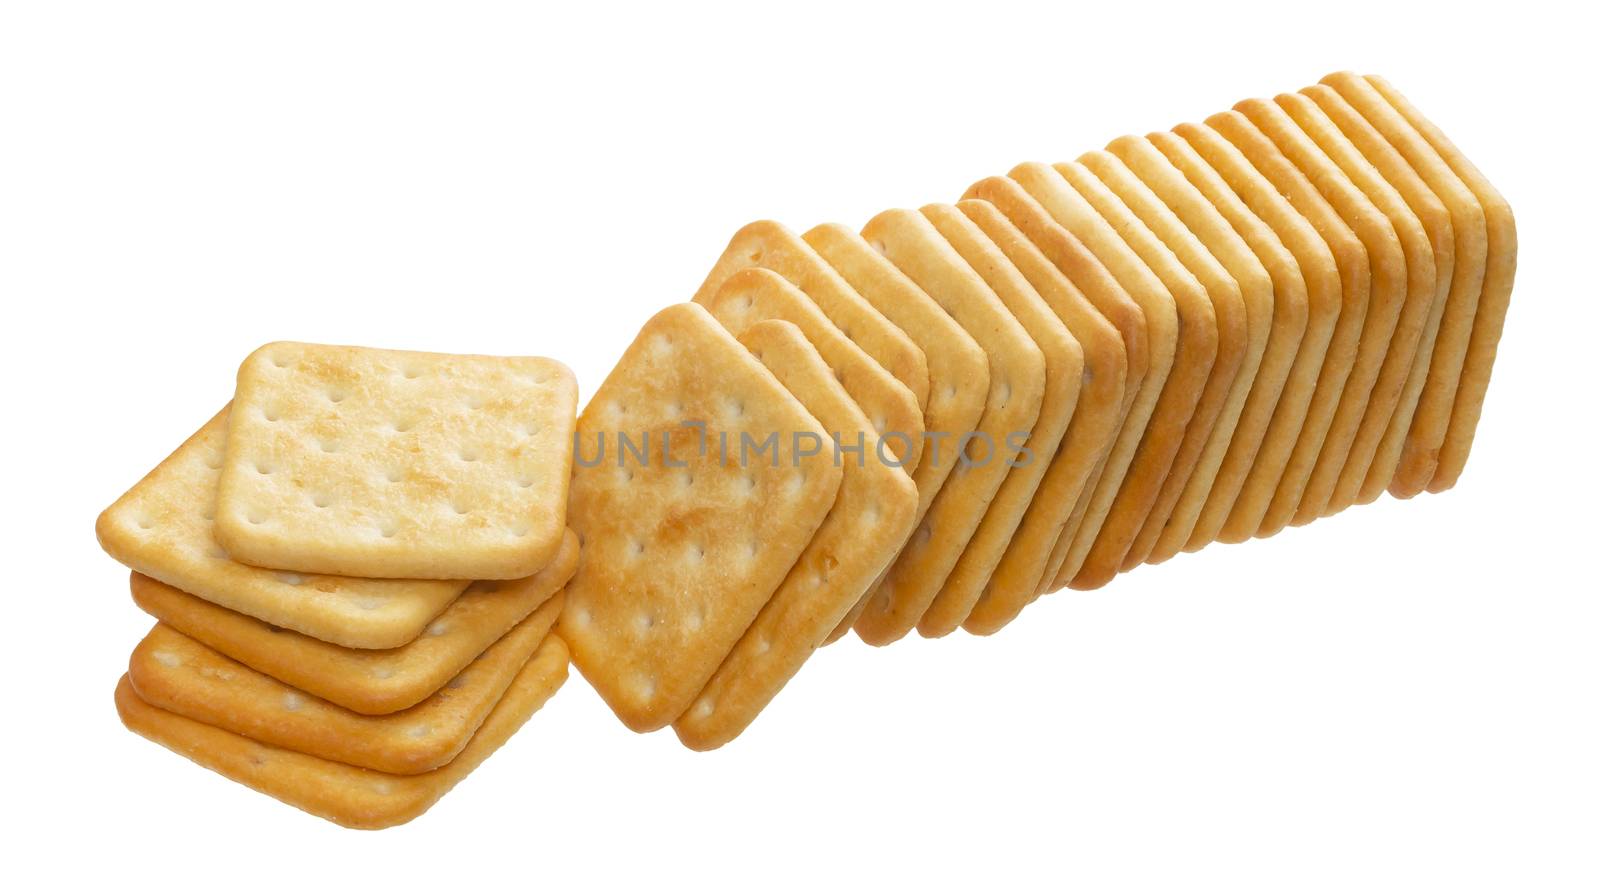 Cracker stack isolated on white background by xamtiw